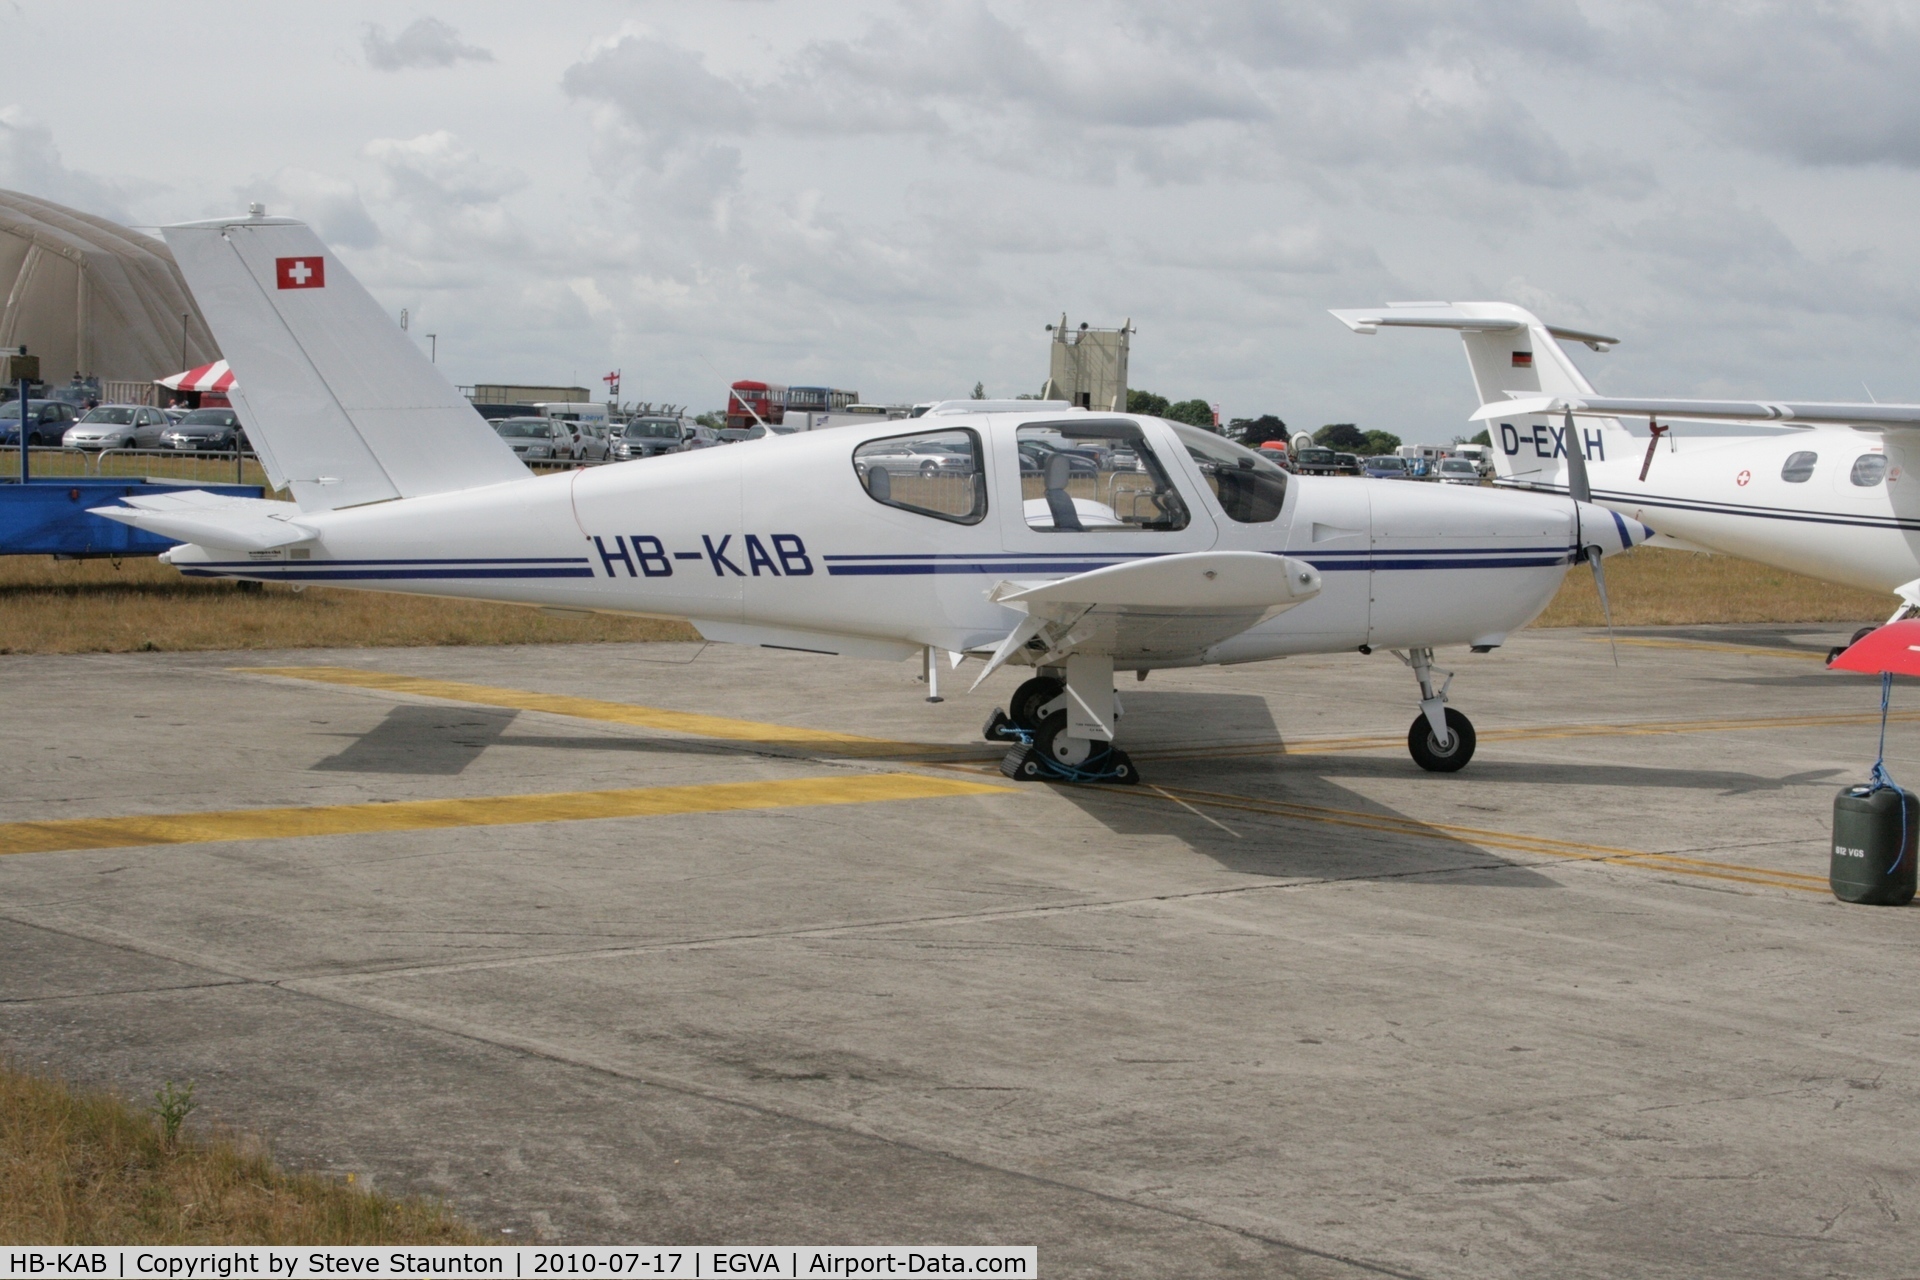 HB-KAB, 1983 Socata TB-20 Trinidad C/N 377, Taken at the Royal International Air Tattoo 2010